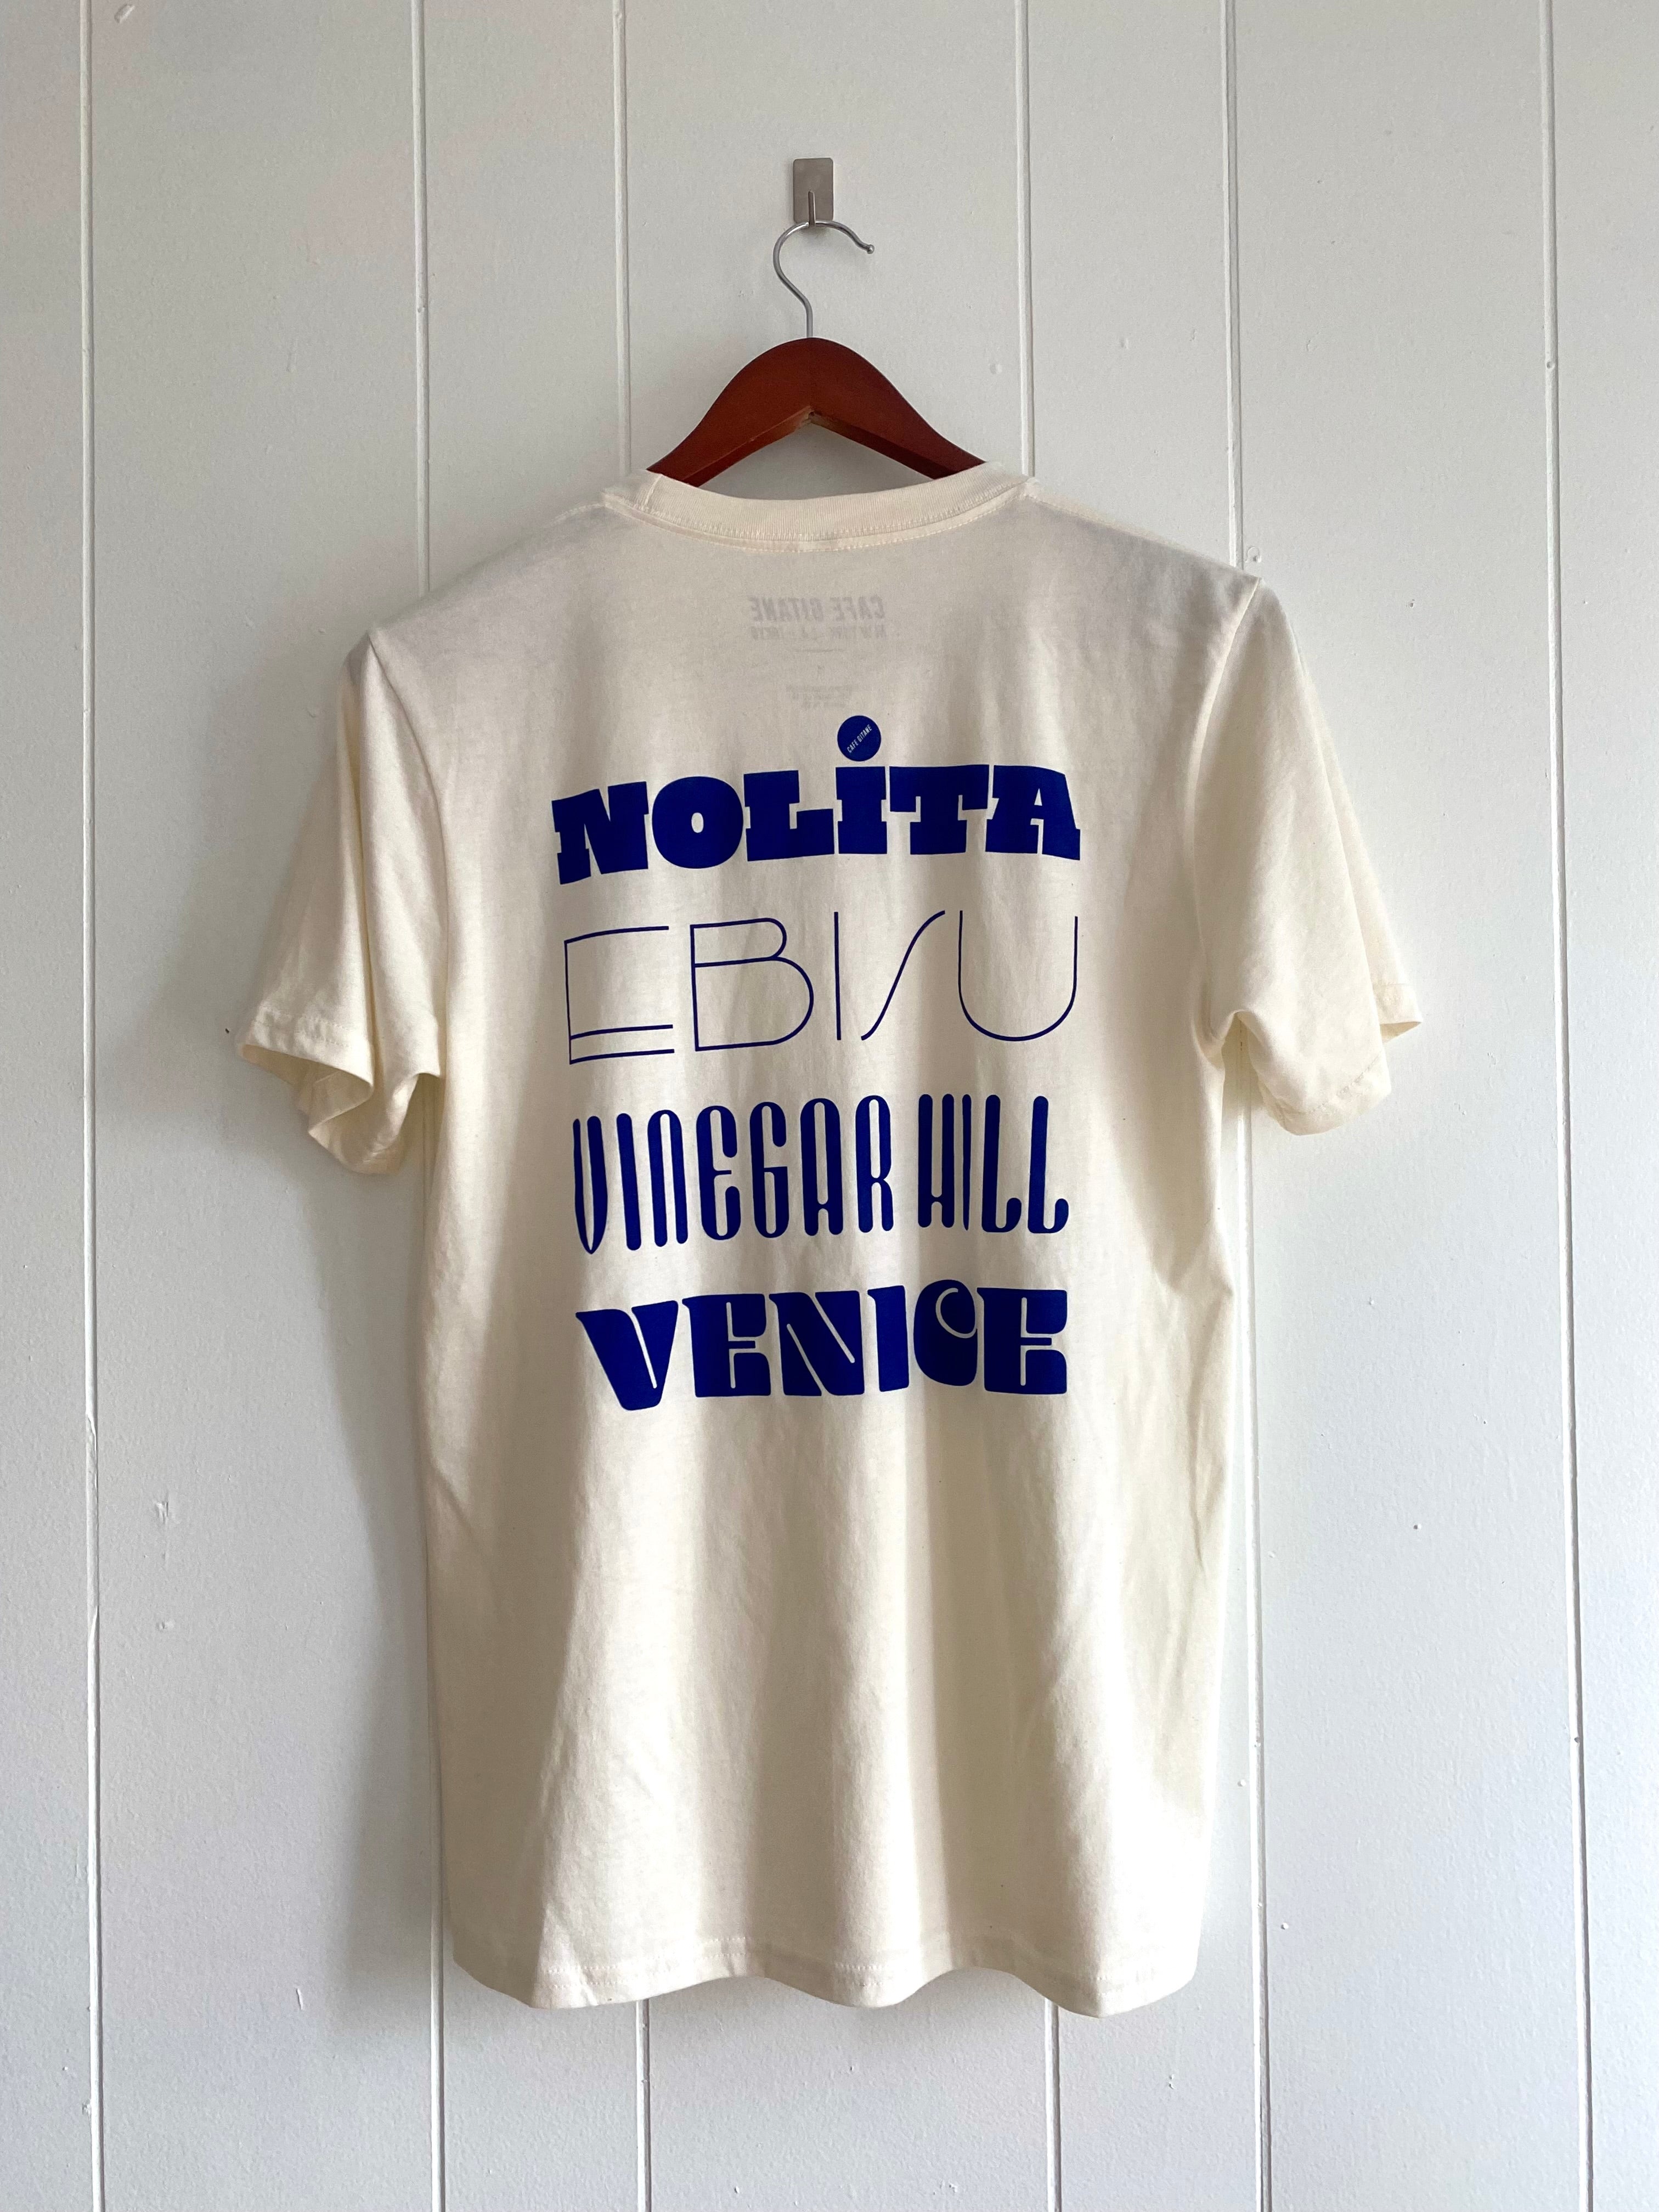 Cafe Gitane merchandise t-shirt nolita ebisu vinegar hill ecofrindly